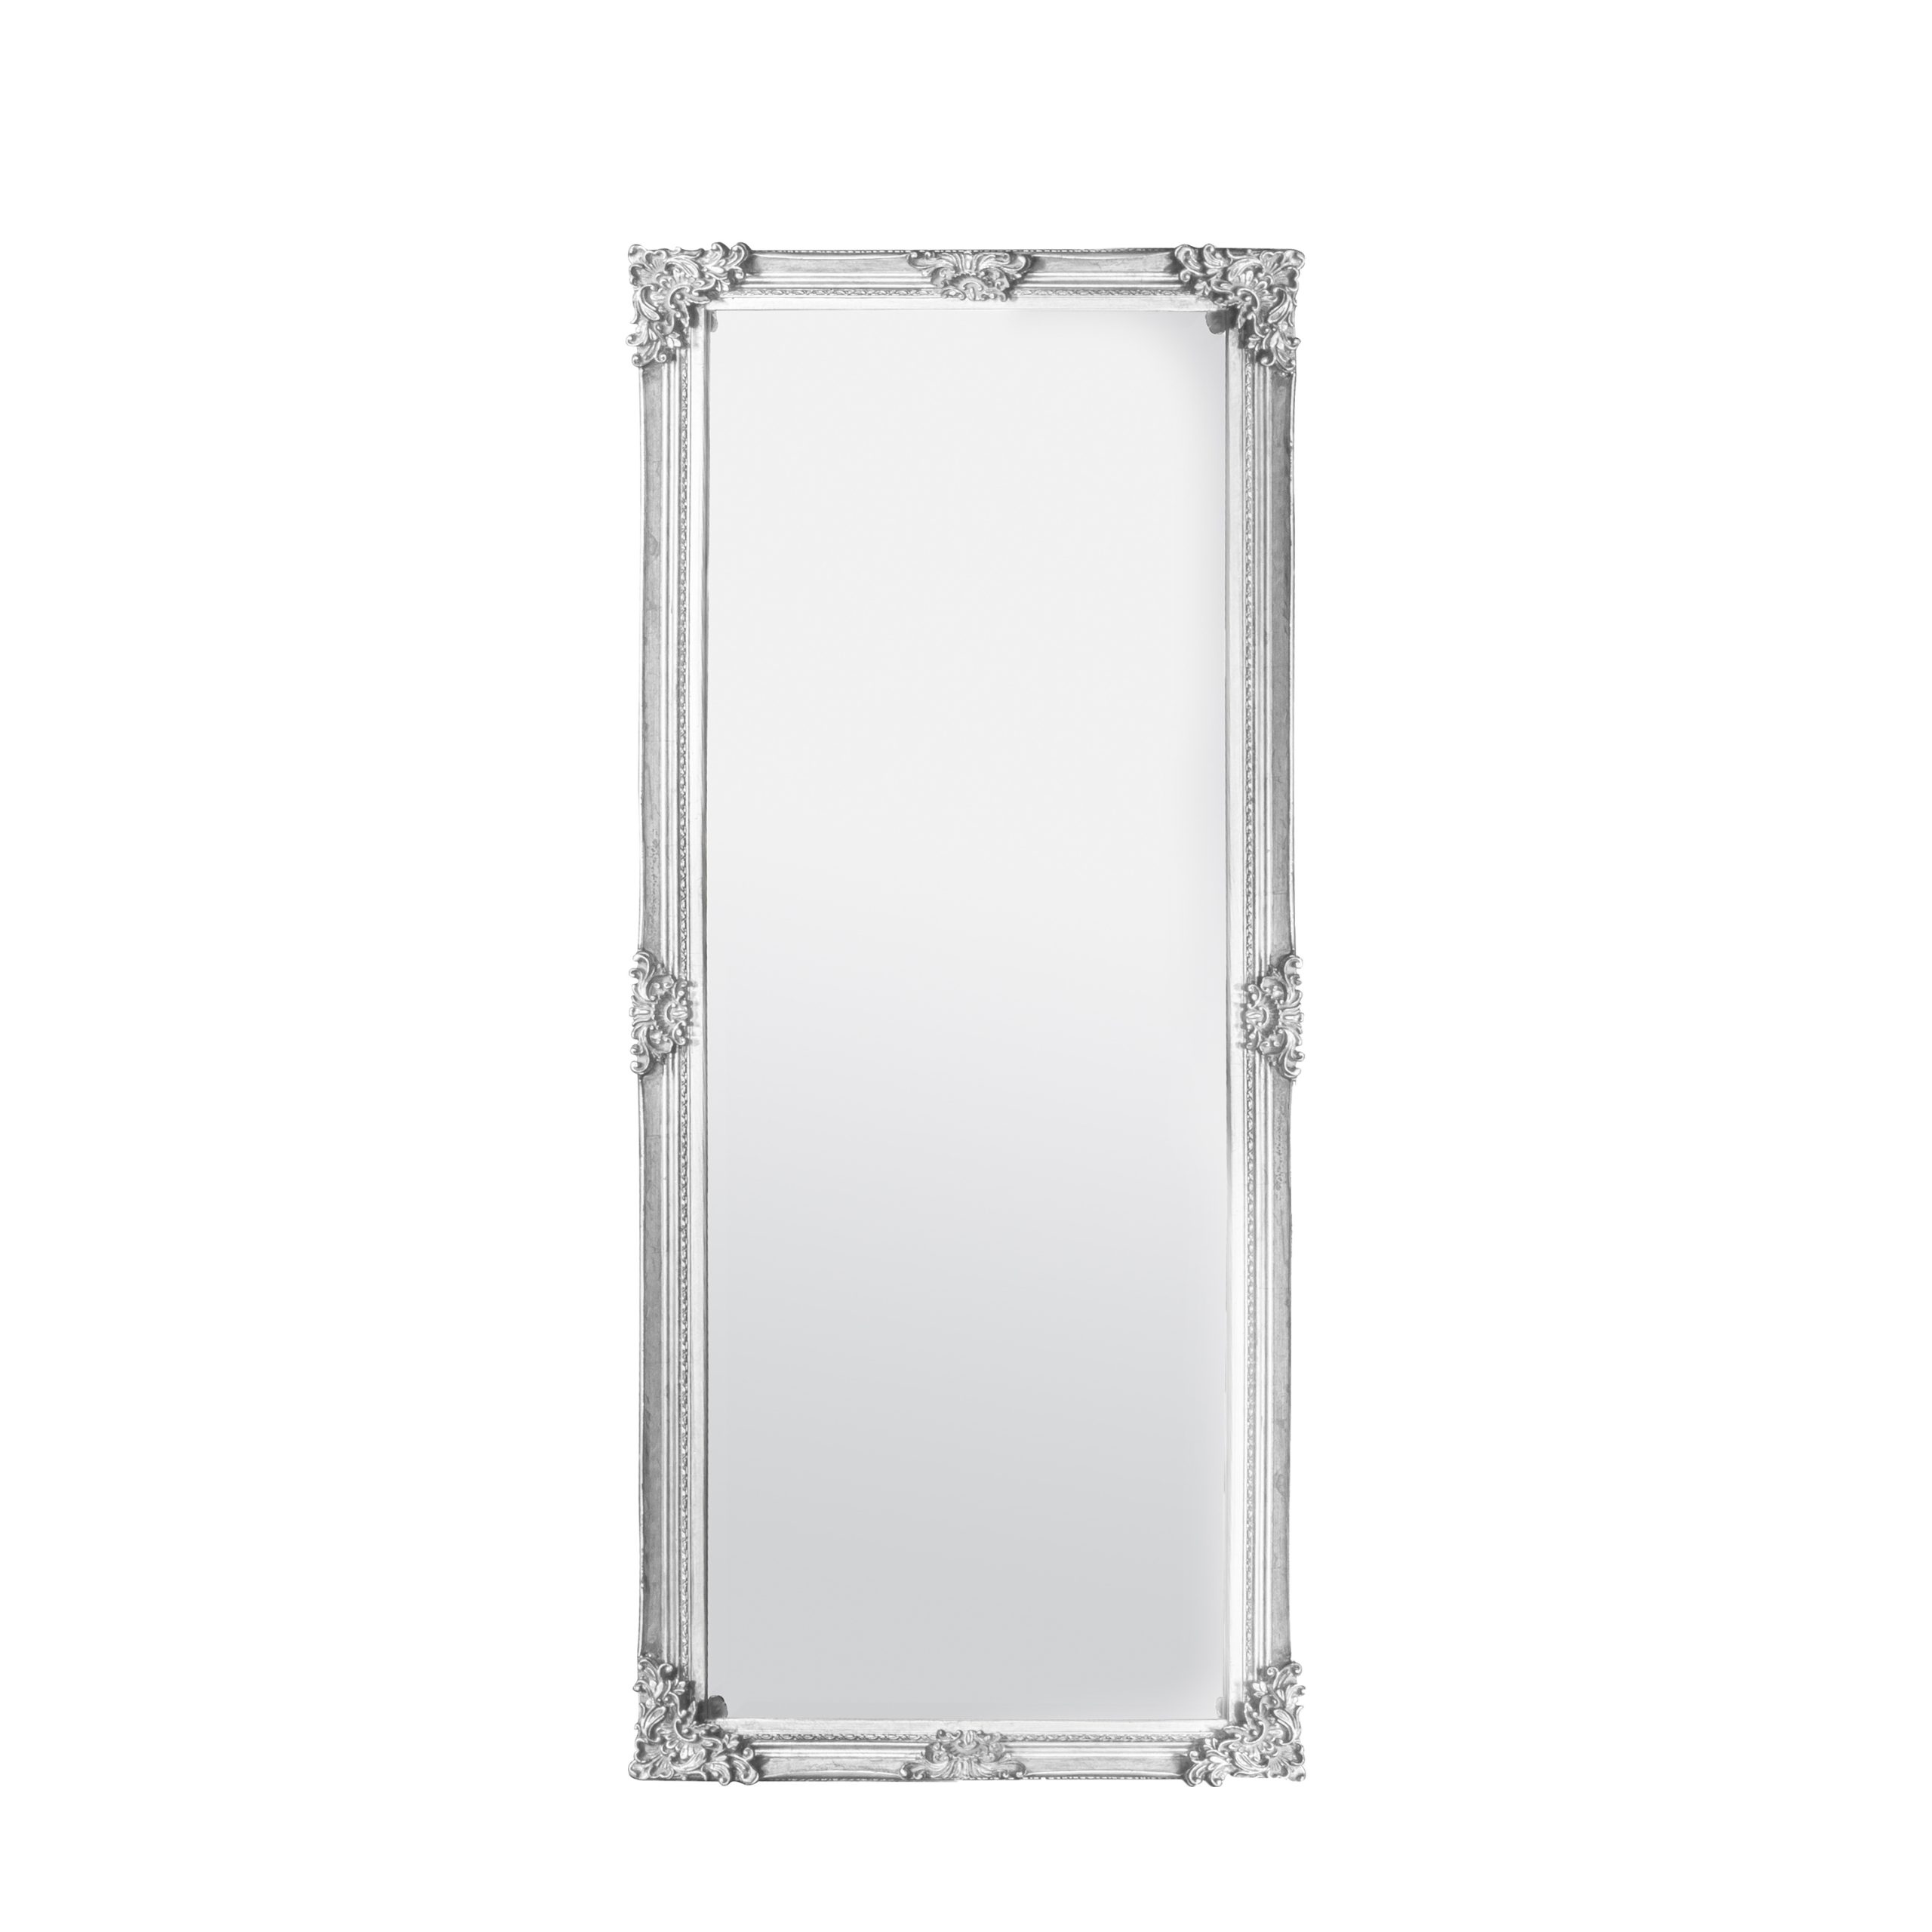 Gallery Direct Fiennes Leaner Mirror Antique White